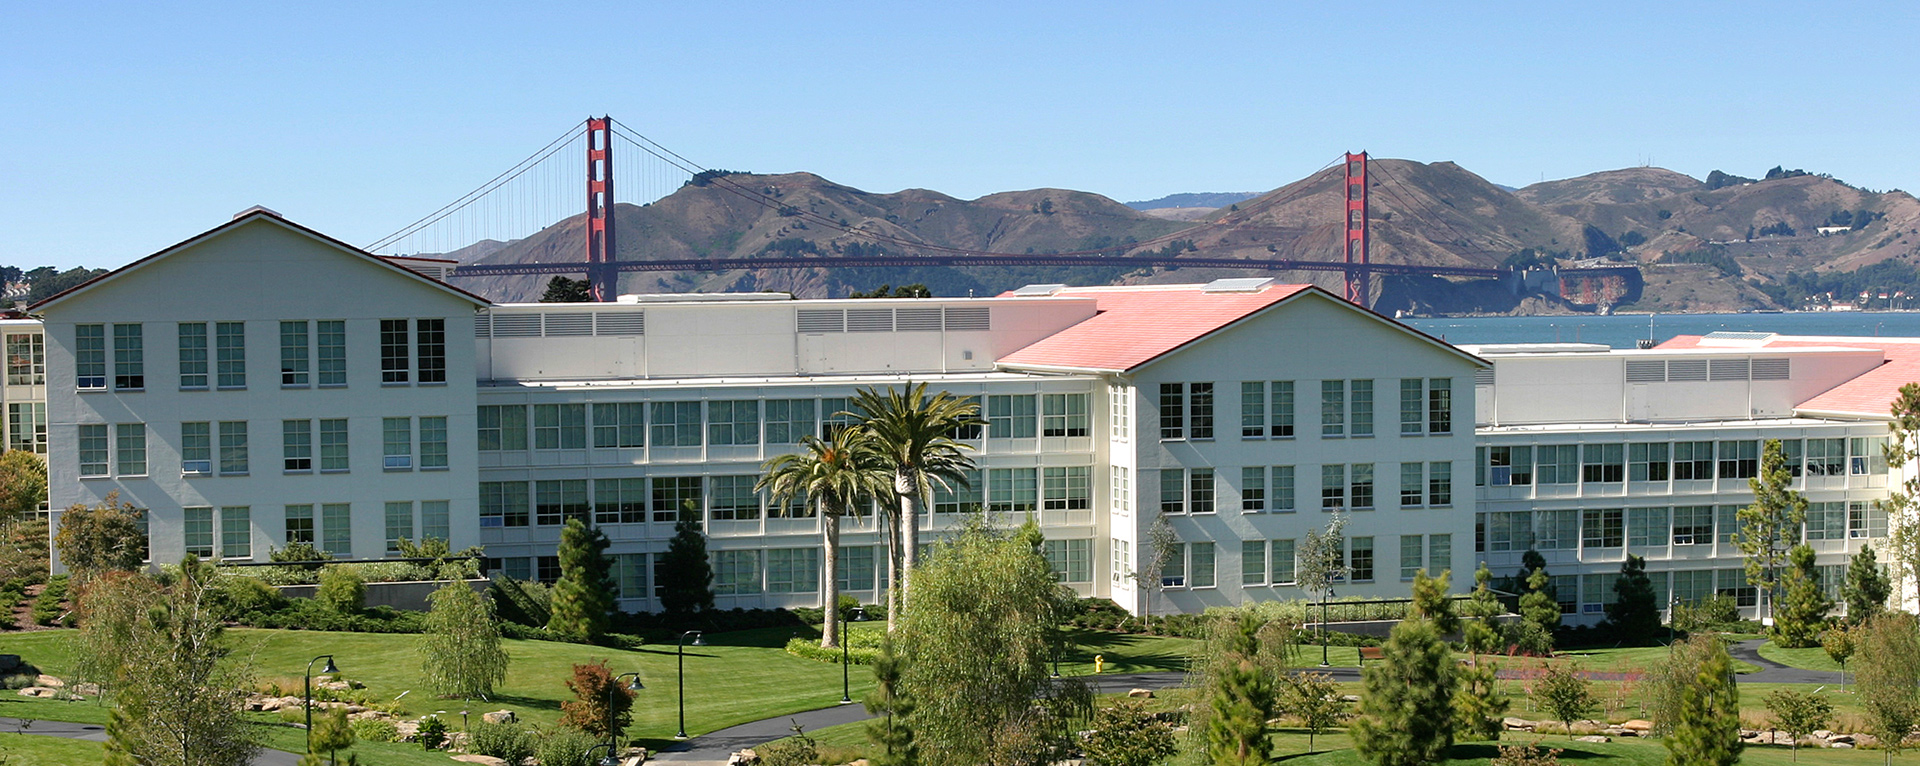 Lucasfilm San Francisco Letterman Digital Arts Center - location of roblox hq